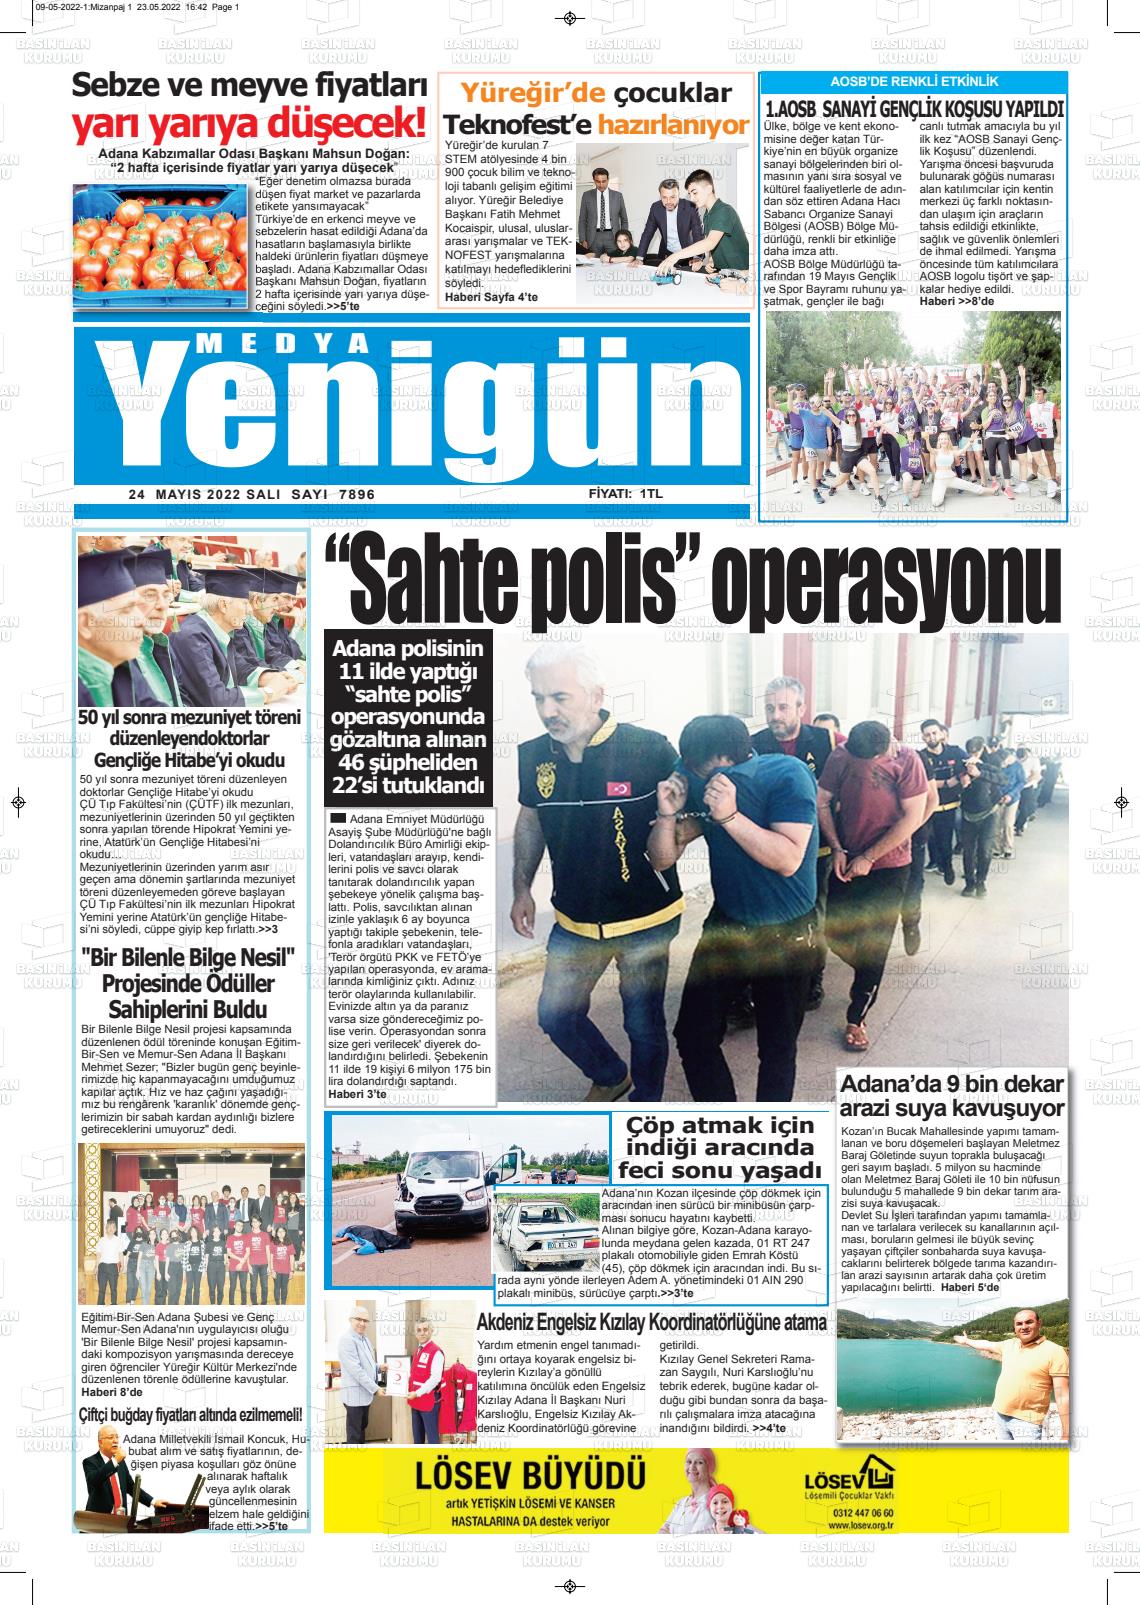 24 Mayıs 2022 Medya Yenigün Gazete Manşeti